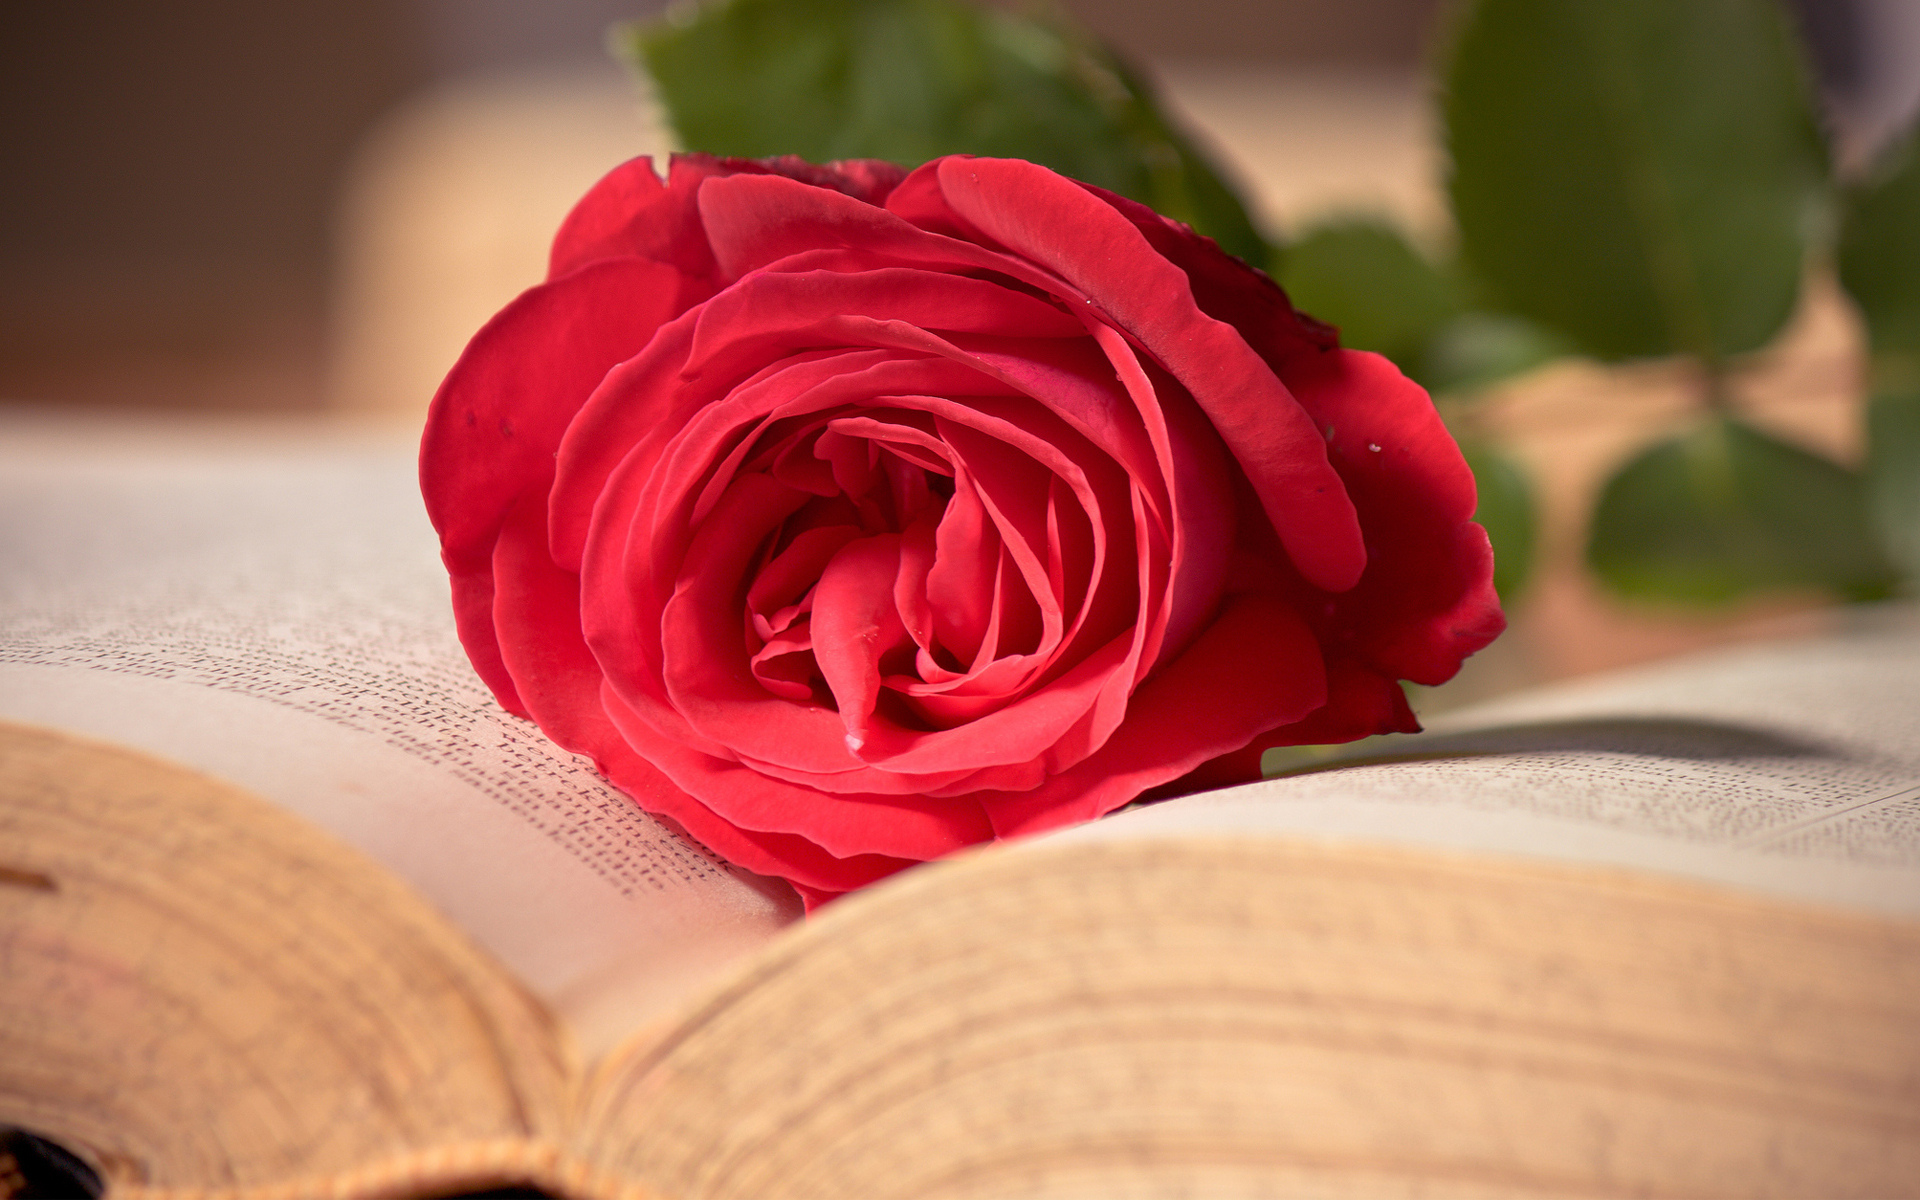 mood, love, flower, rose, man made, book, romantic phone background